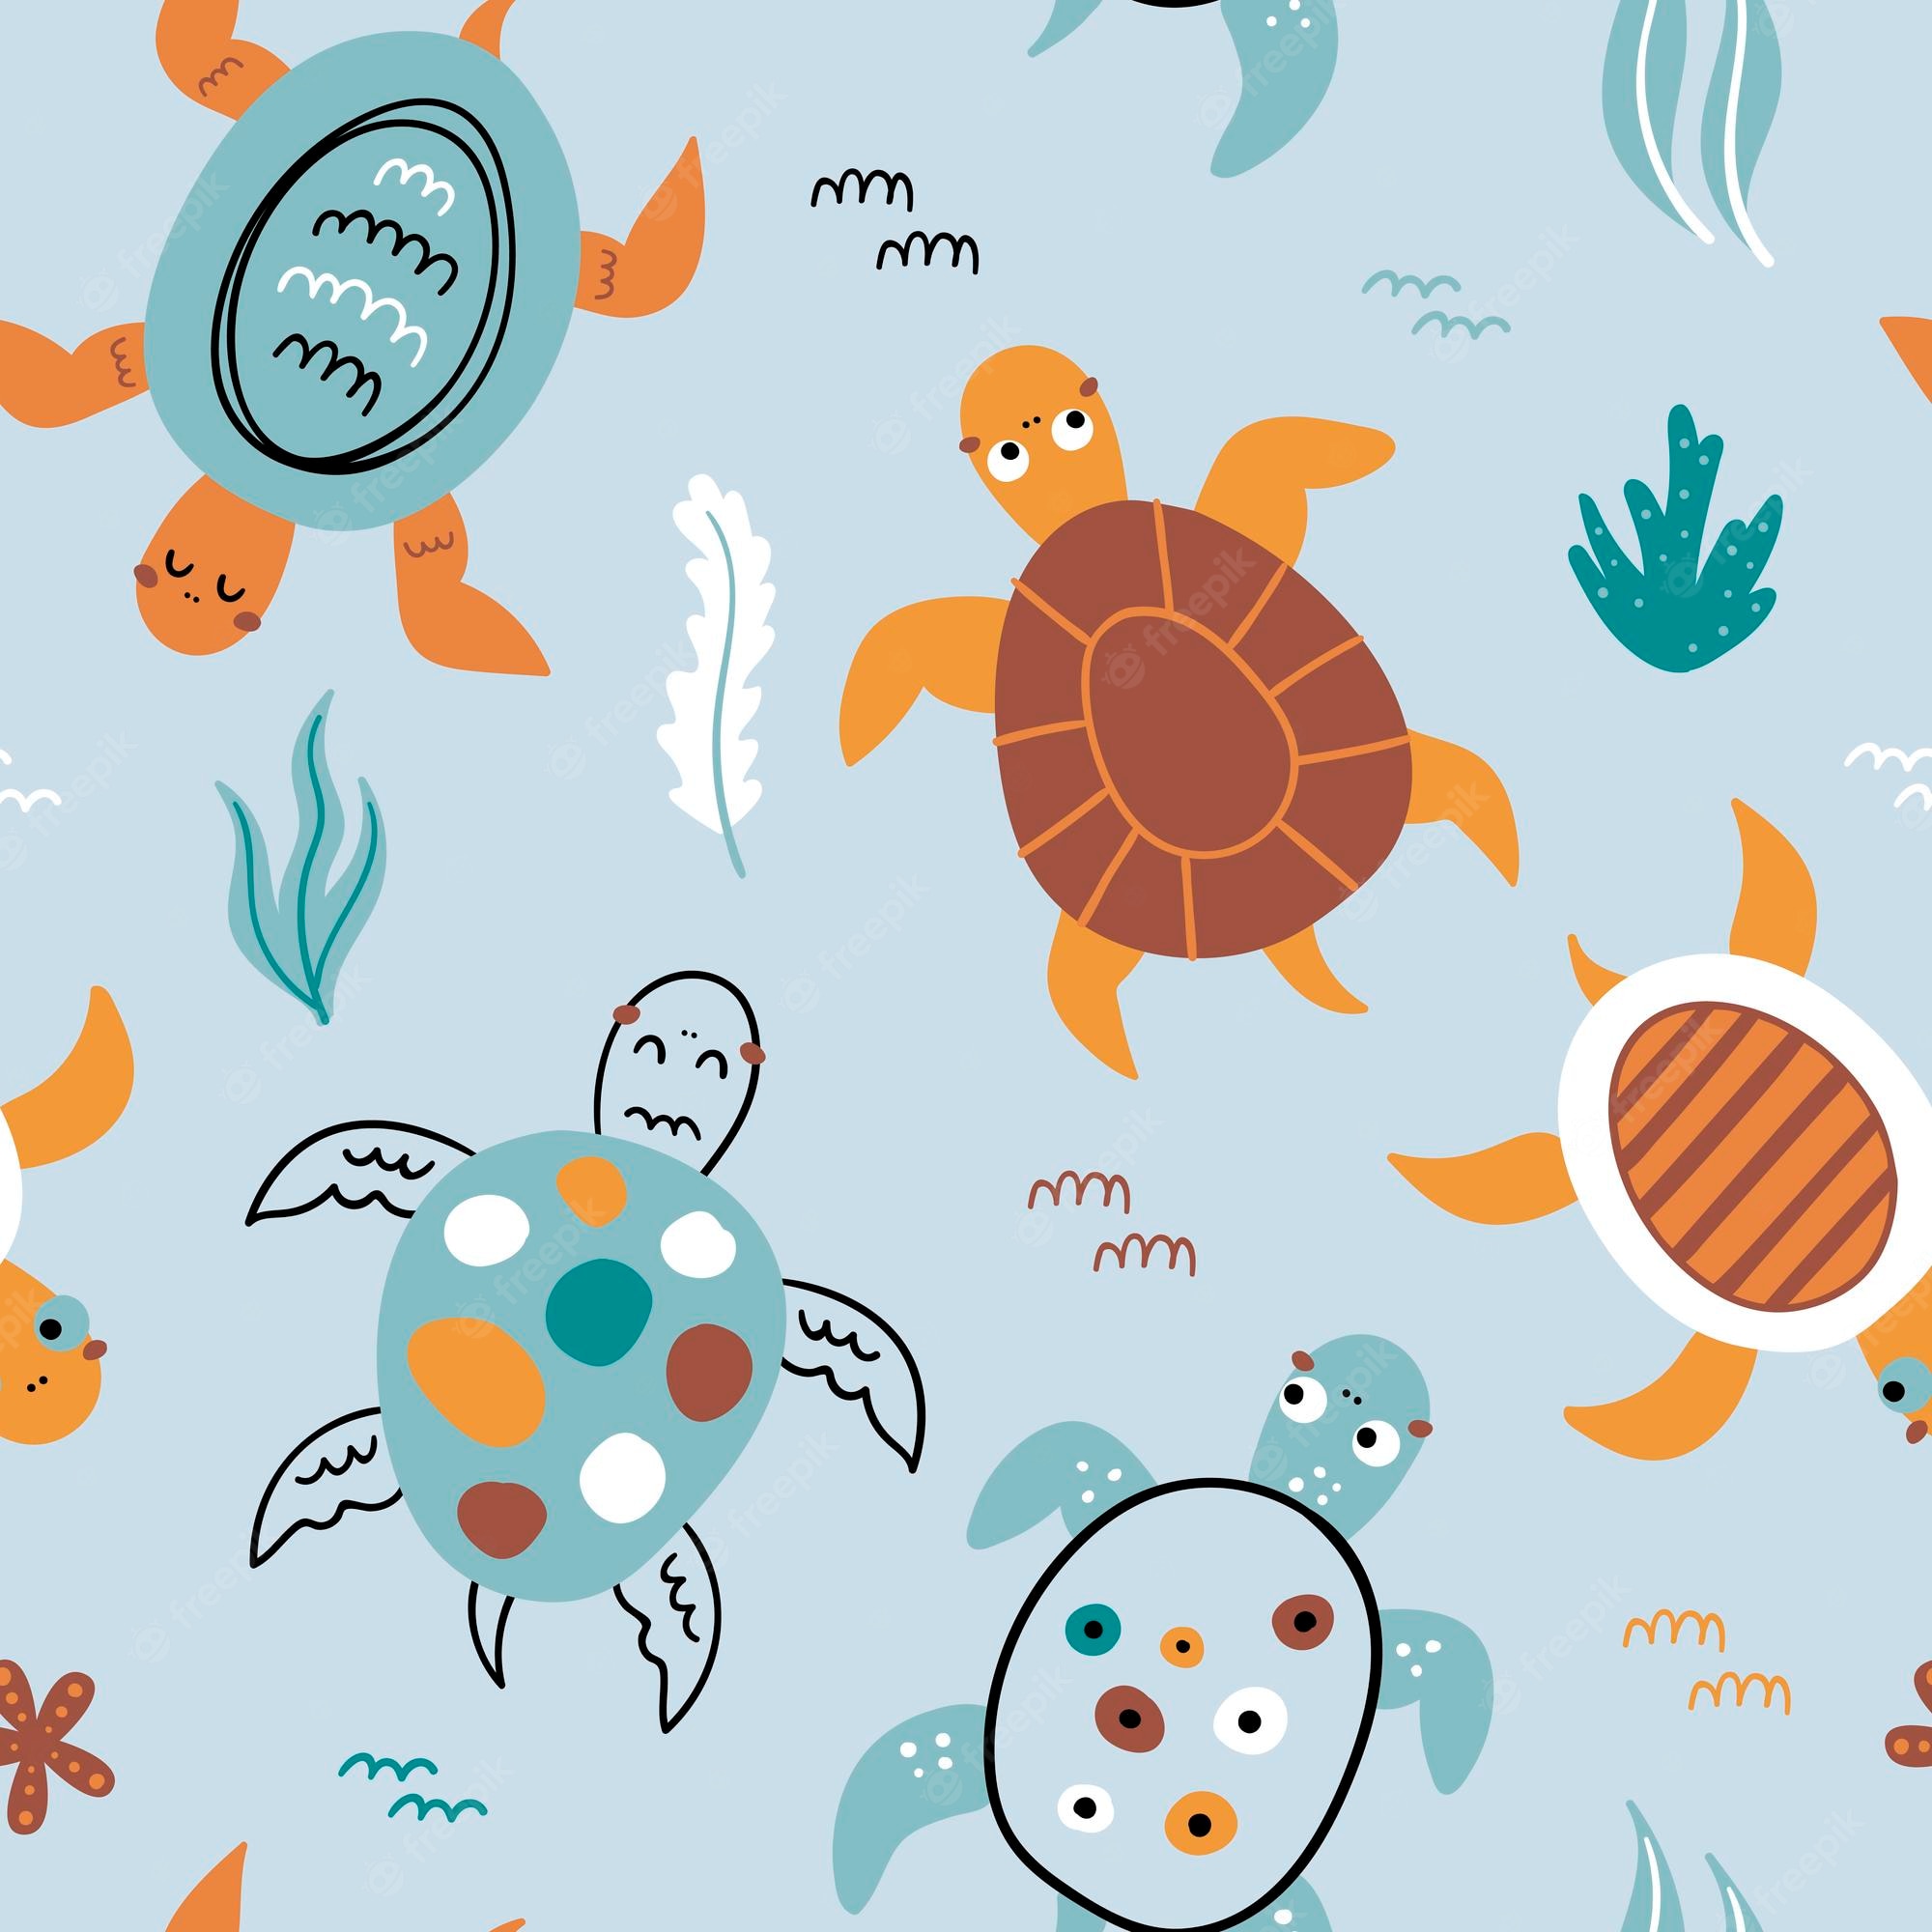 Cartoon Sea Turtle Wallpapers